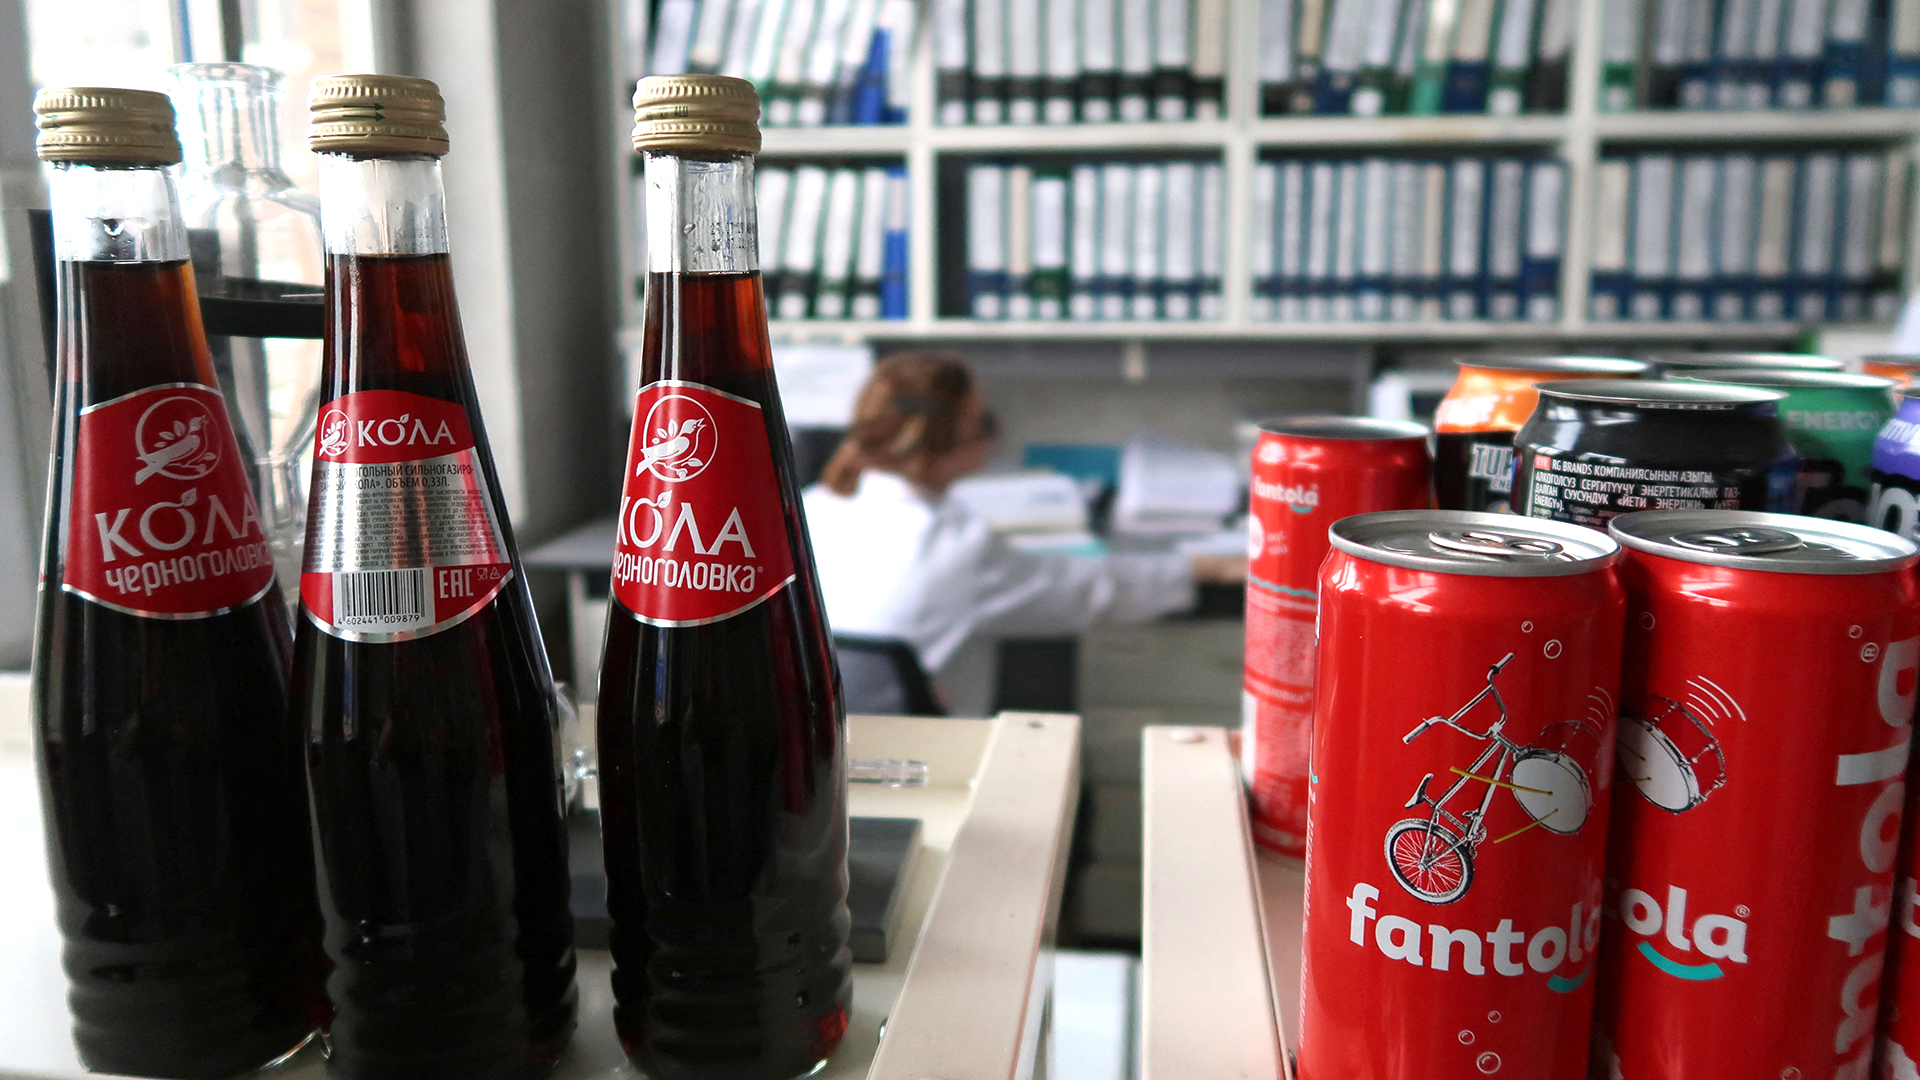 Drei Flaschen der Cola Chernogolovka | REUTERS